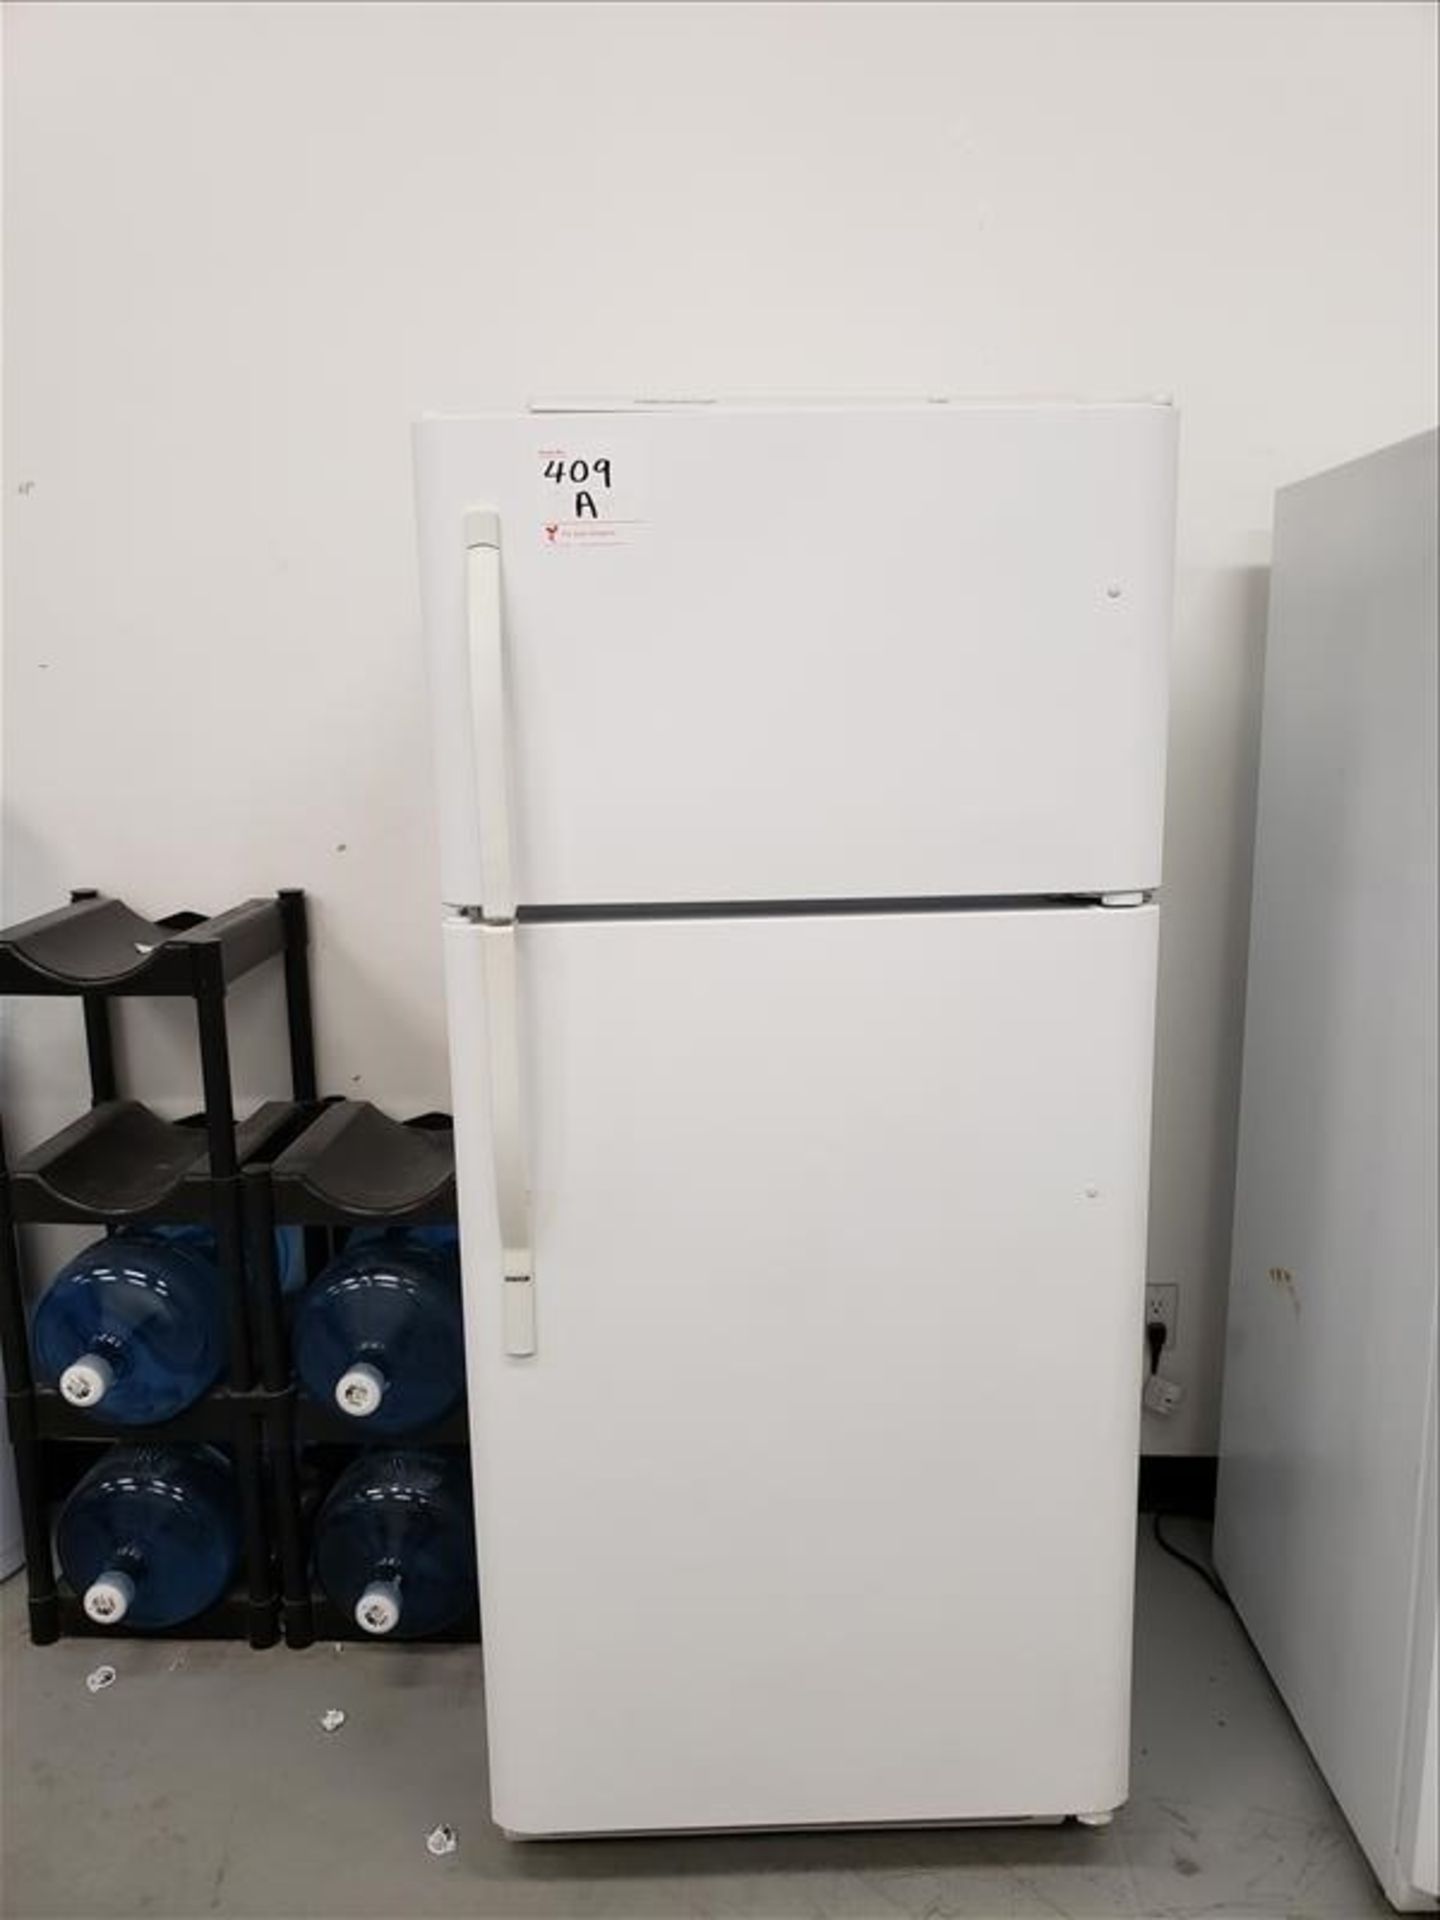 Kenmore fridge/freezer